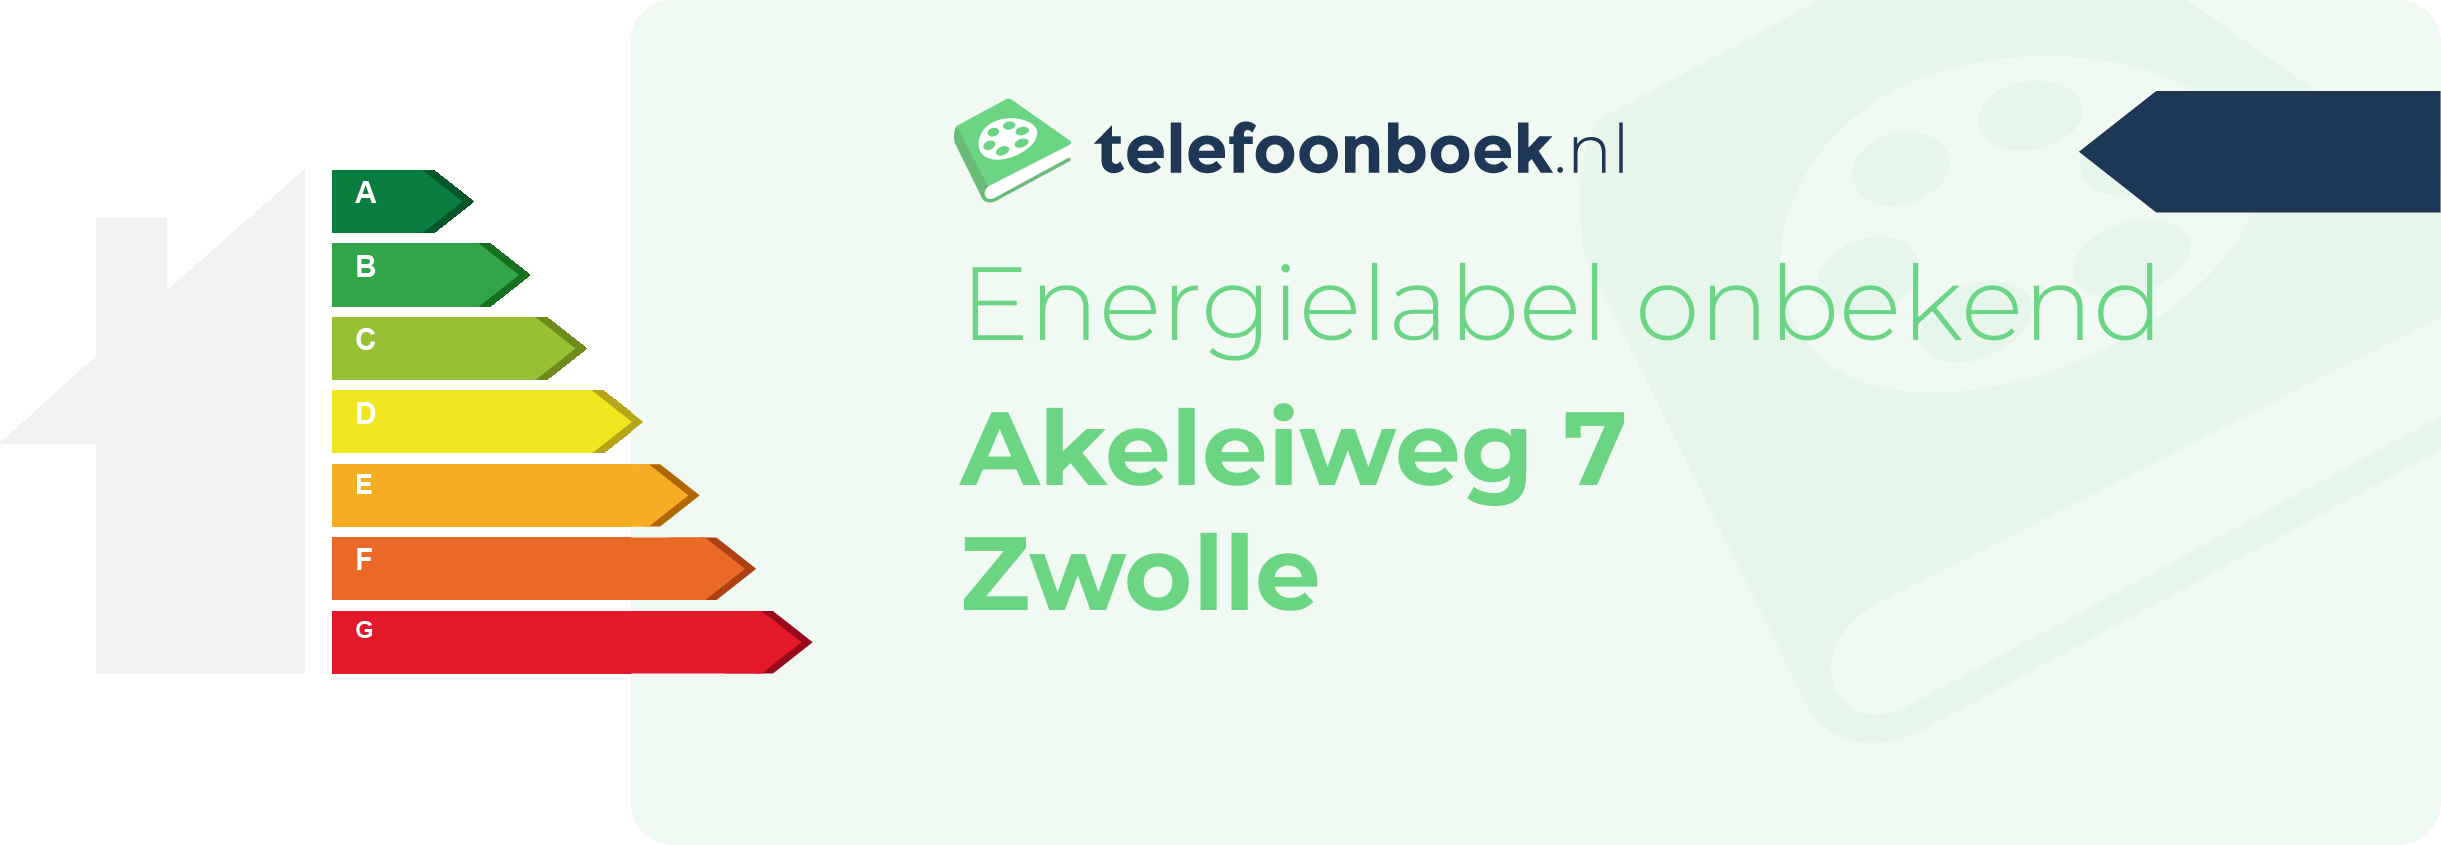 Energielabel Akeleiweg 7 Zwolle